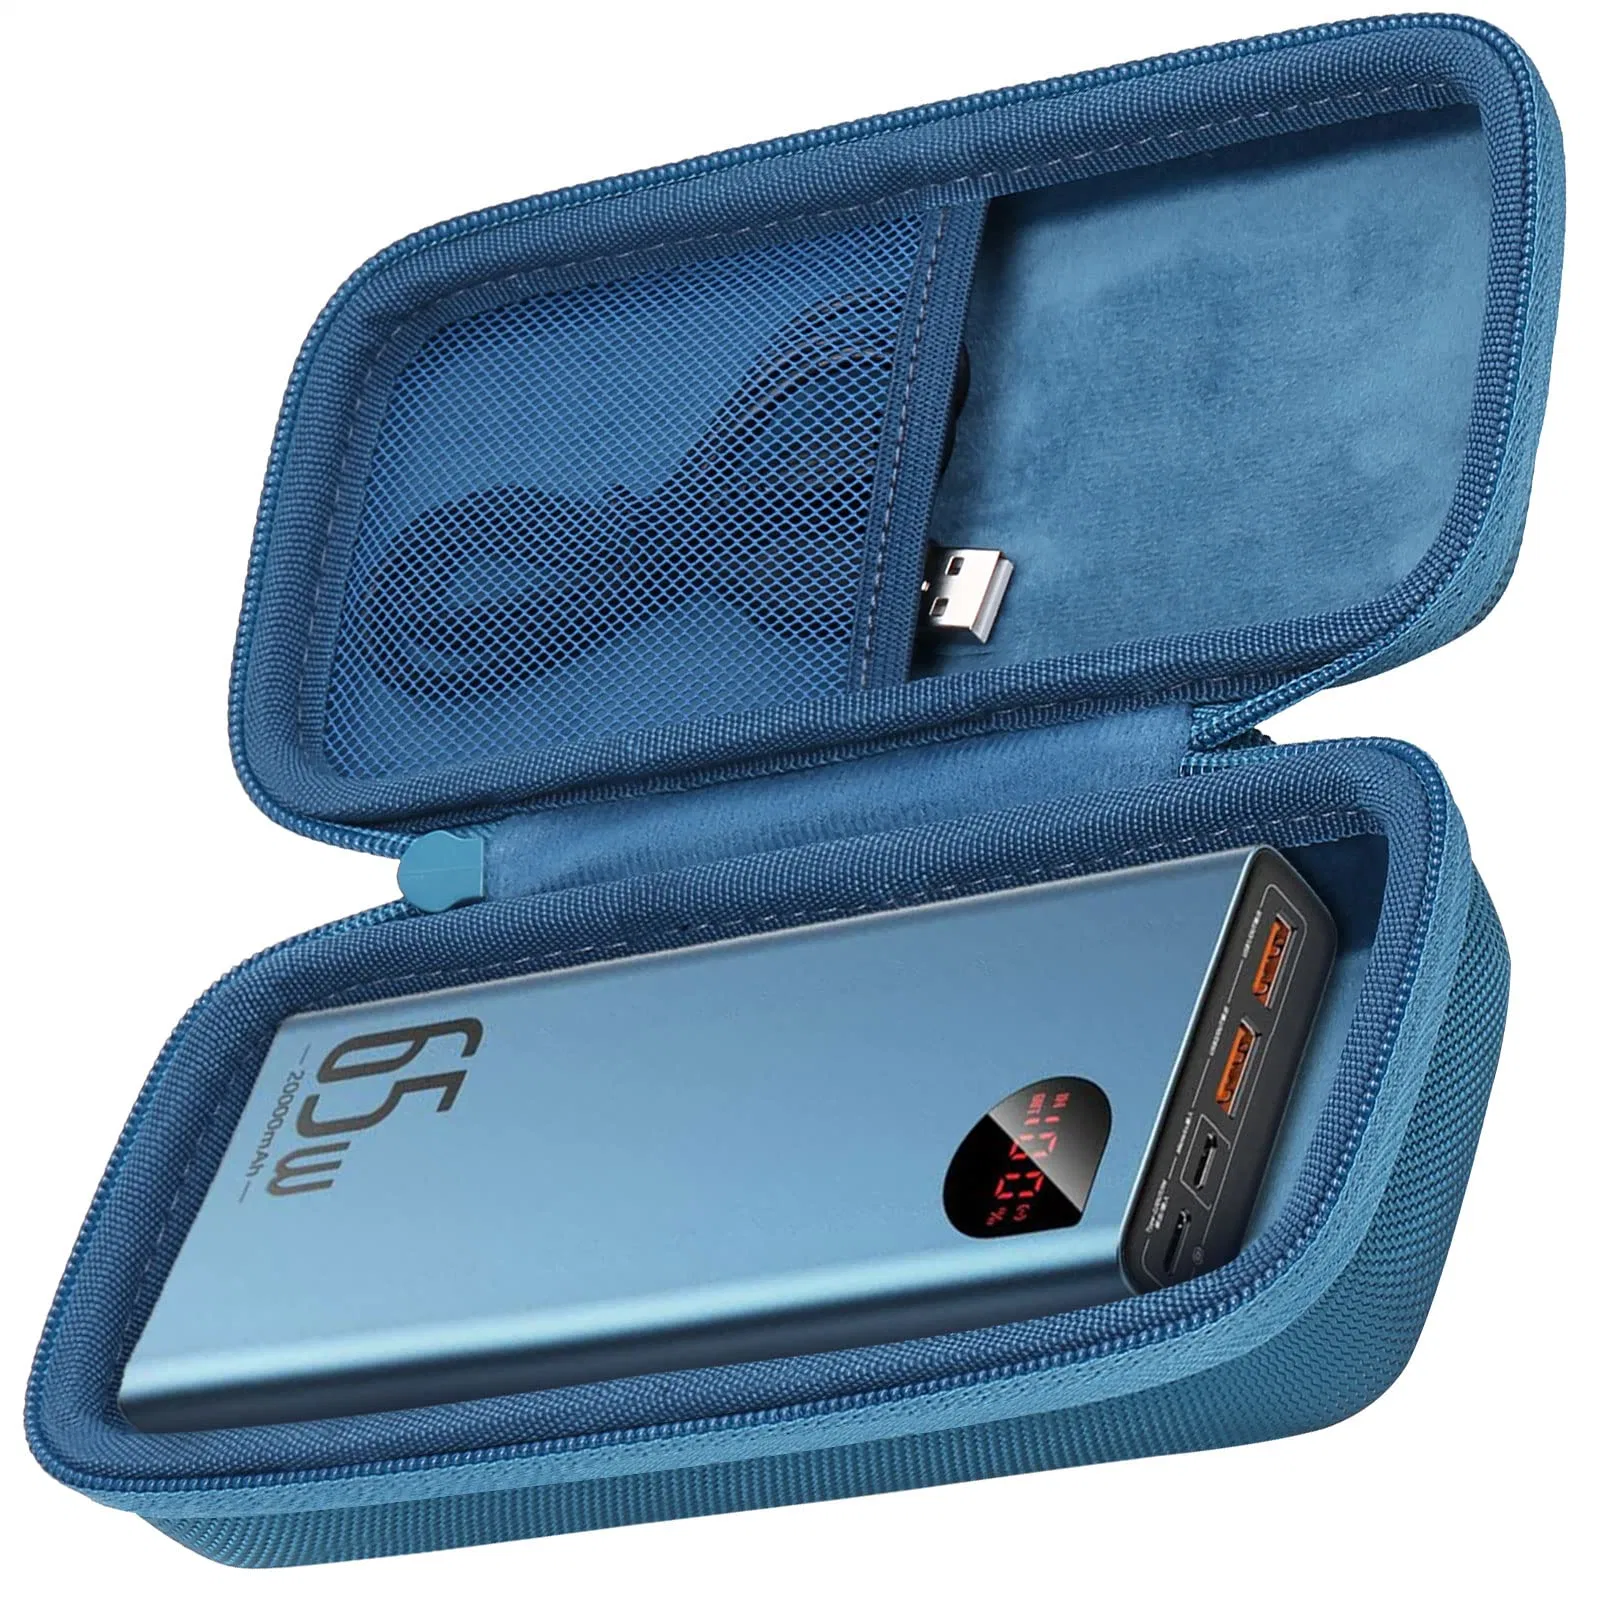 Portable Charger Travel Case for Baseus Power Bank Laptop Portable Charger Storage Bag